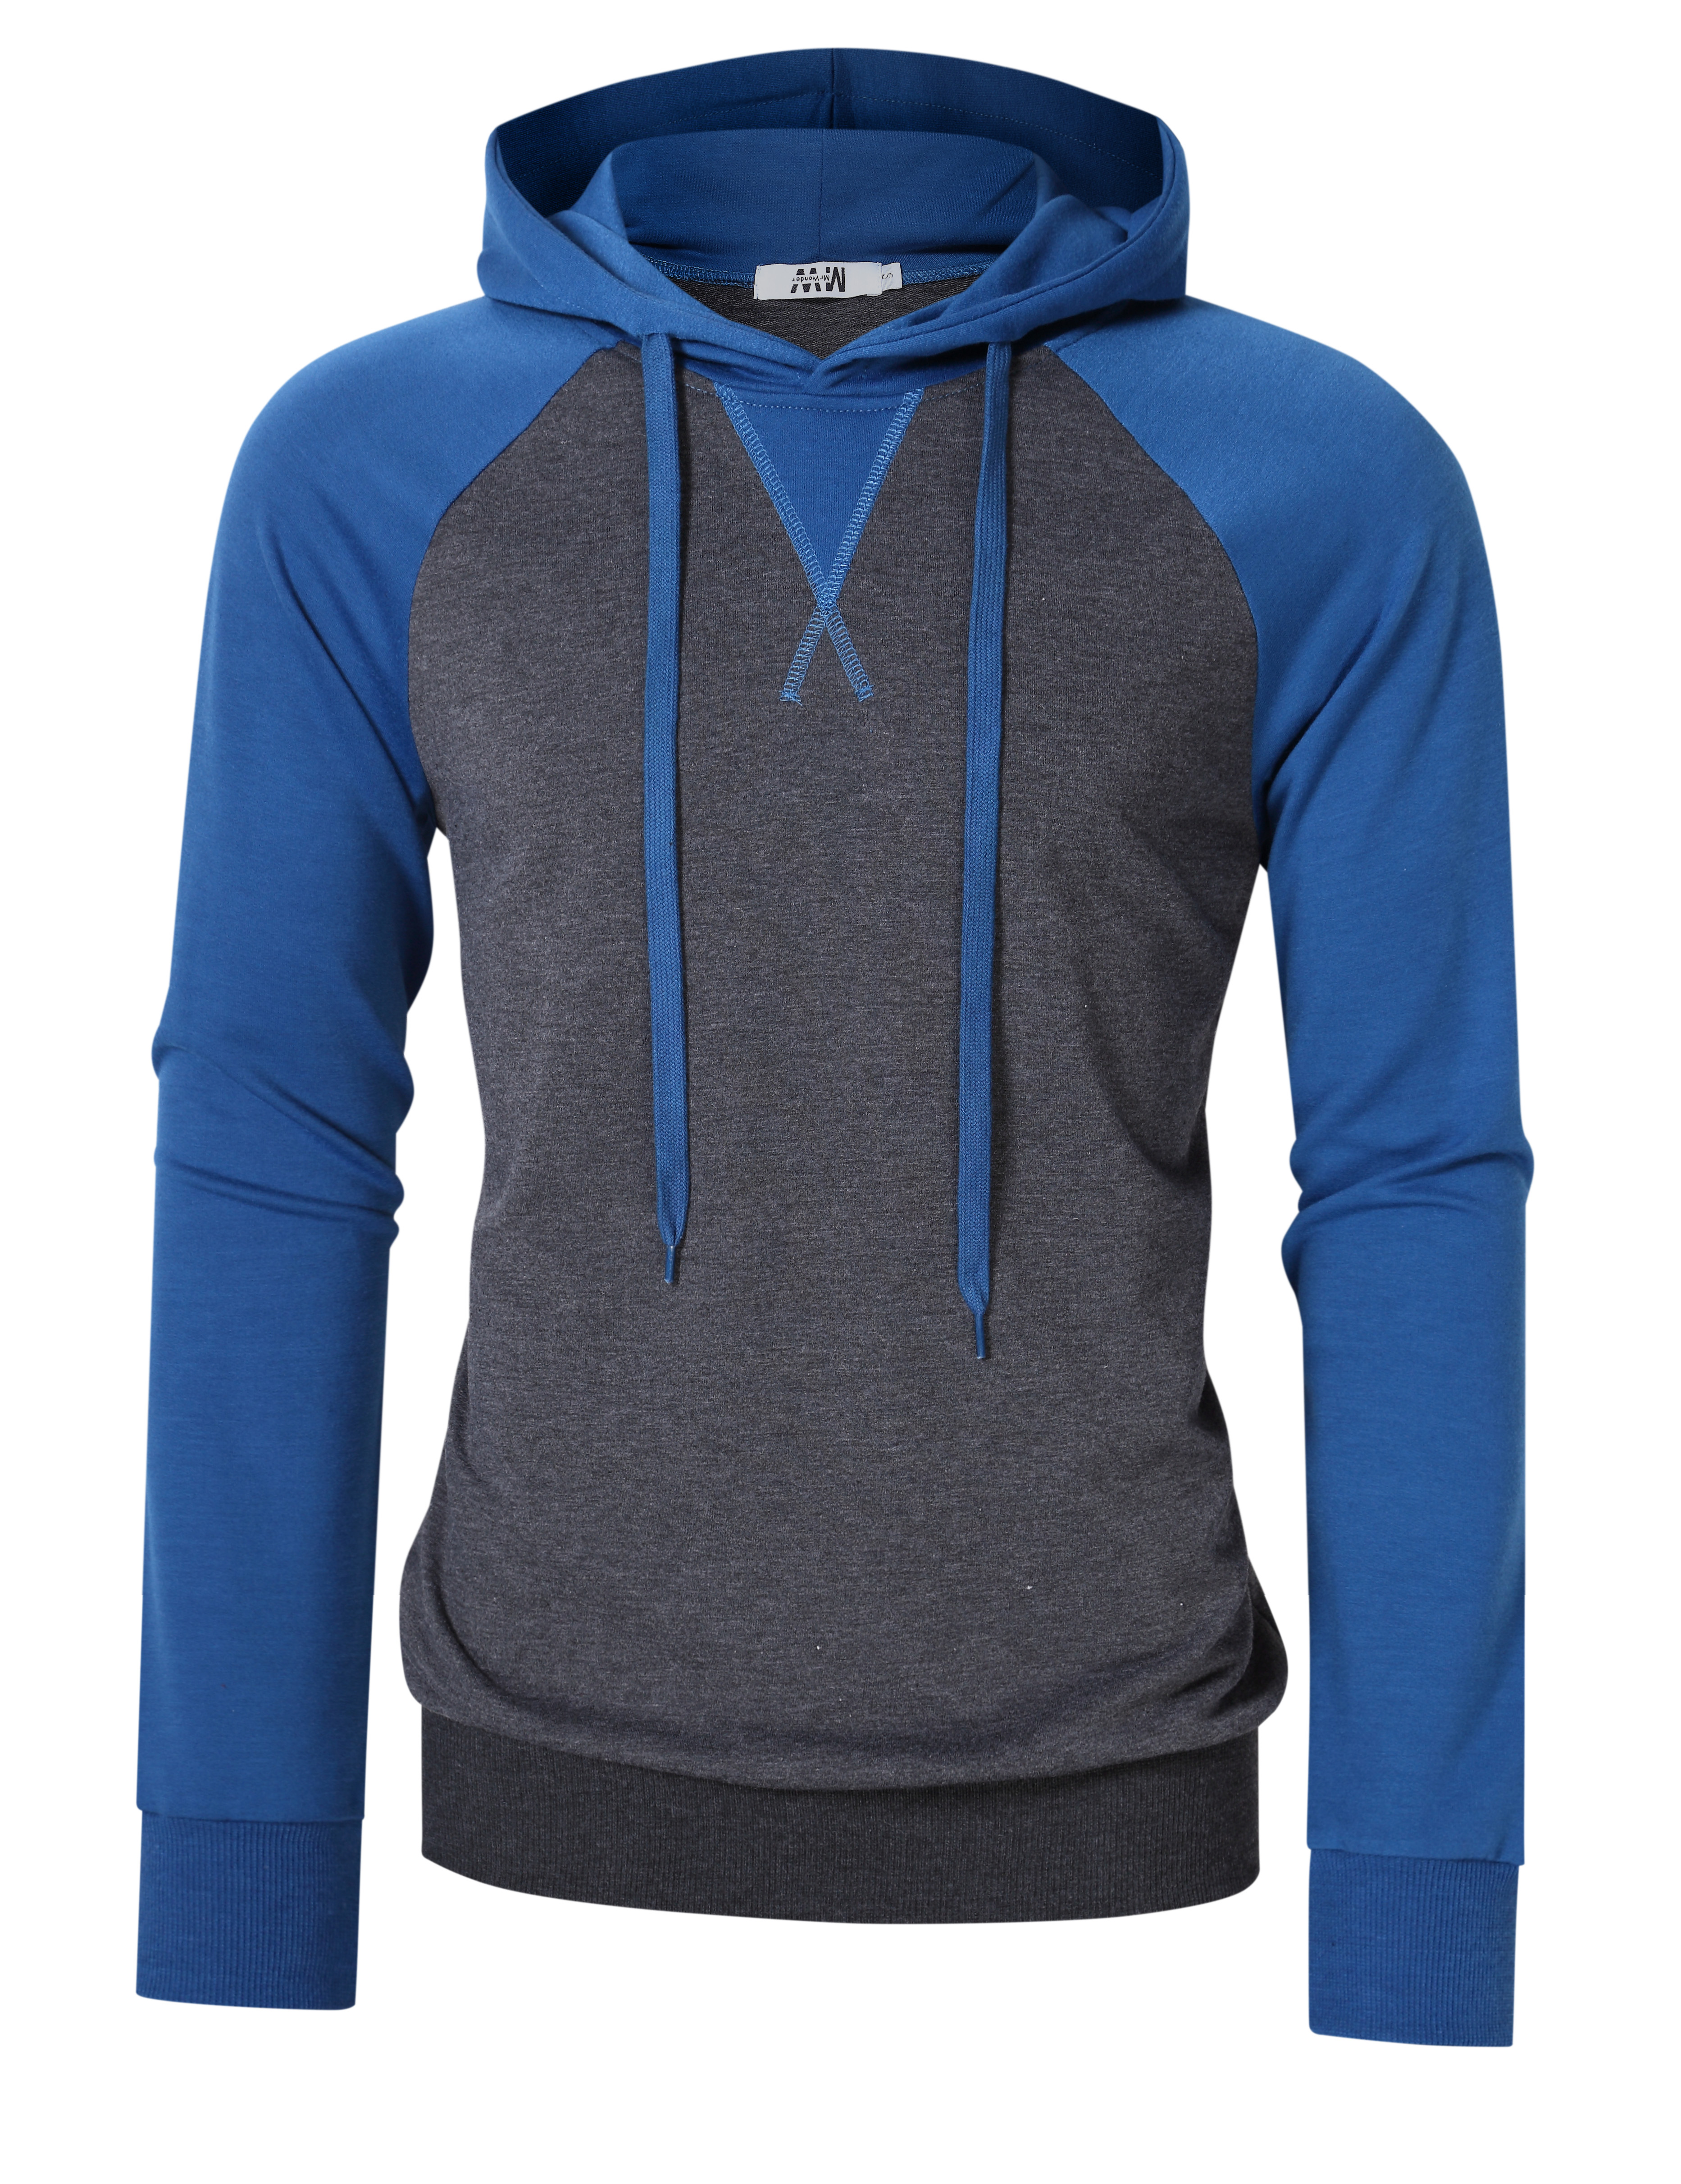 [US Direct] MrWonder Men's Pullover Hoodie Sweatshirt Lightweight Raglan Baseball Jersey Shirt